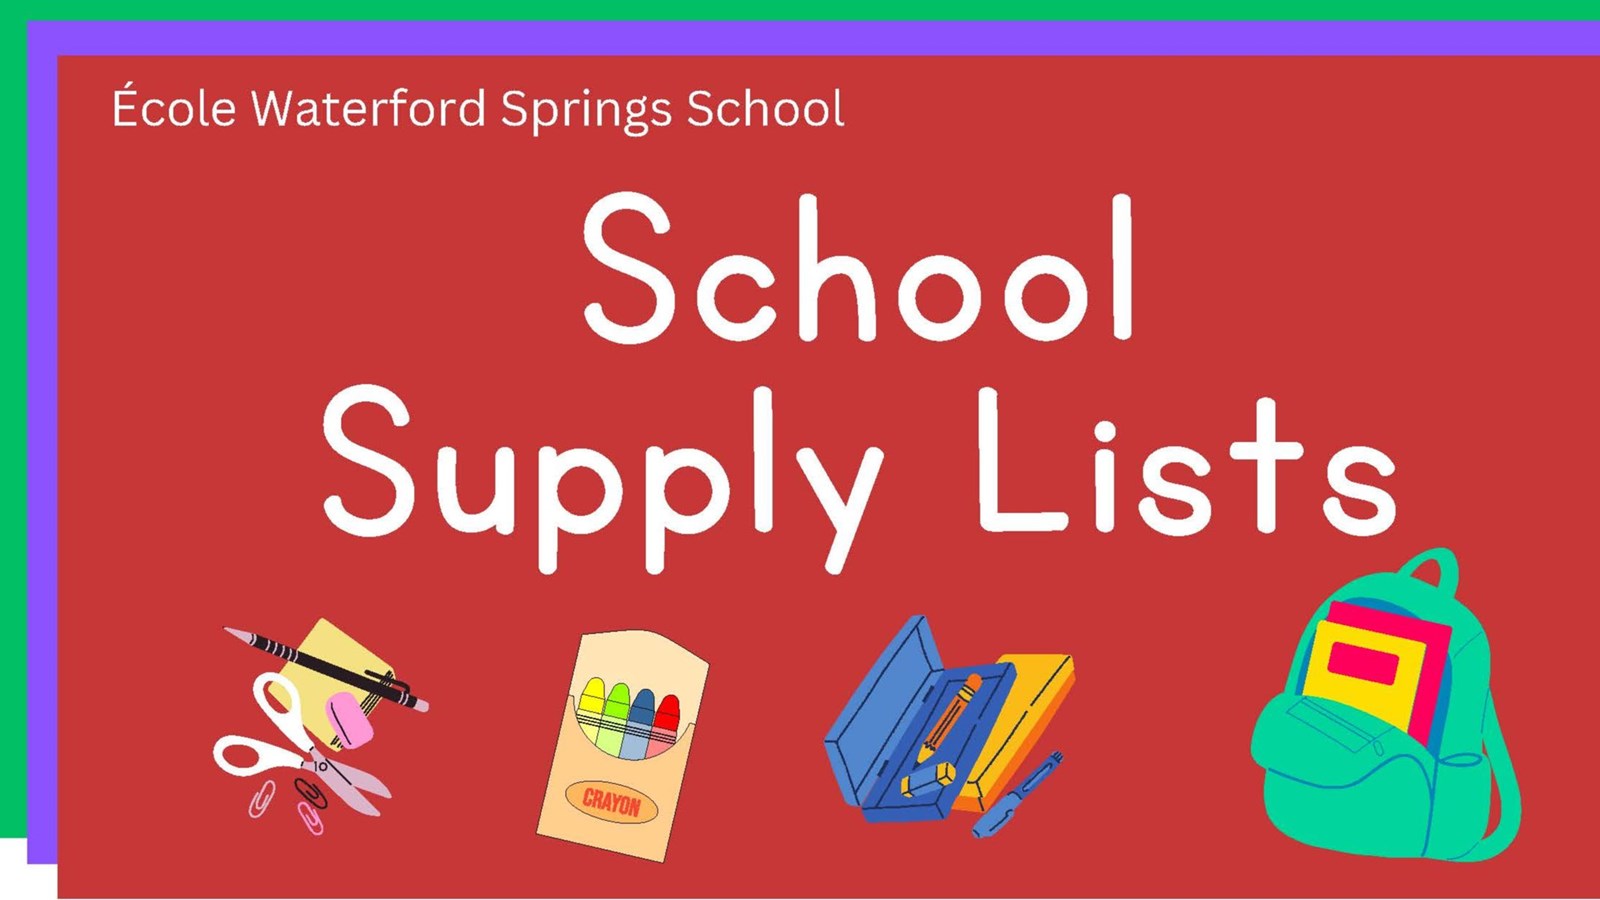 School Supply Lists